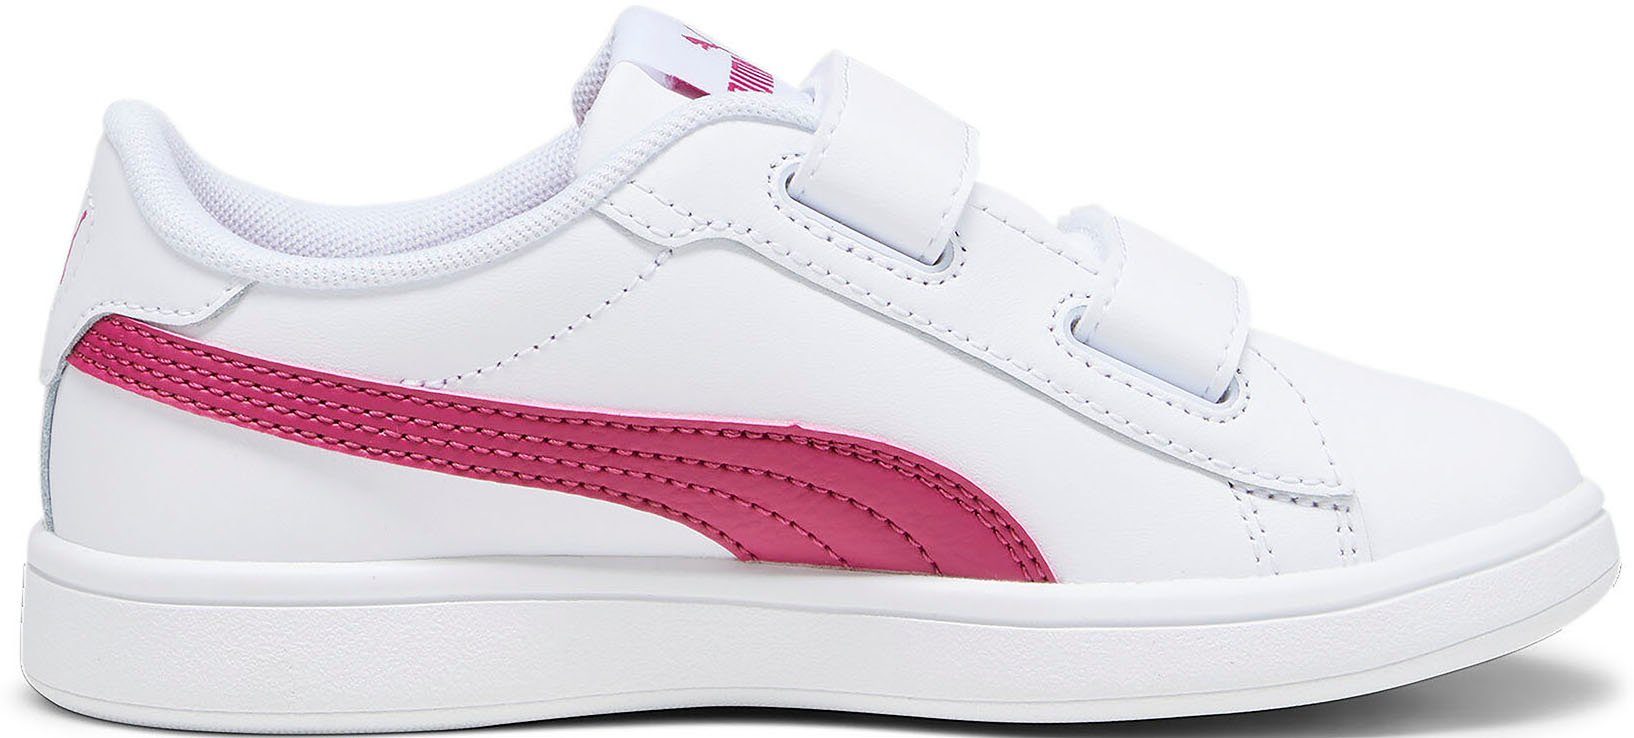 PUMA SMASH White-Pinktastic mit PUMA Klettverschluss V L 3.0 PS Sneaker